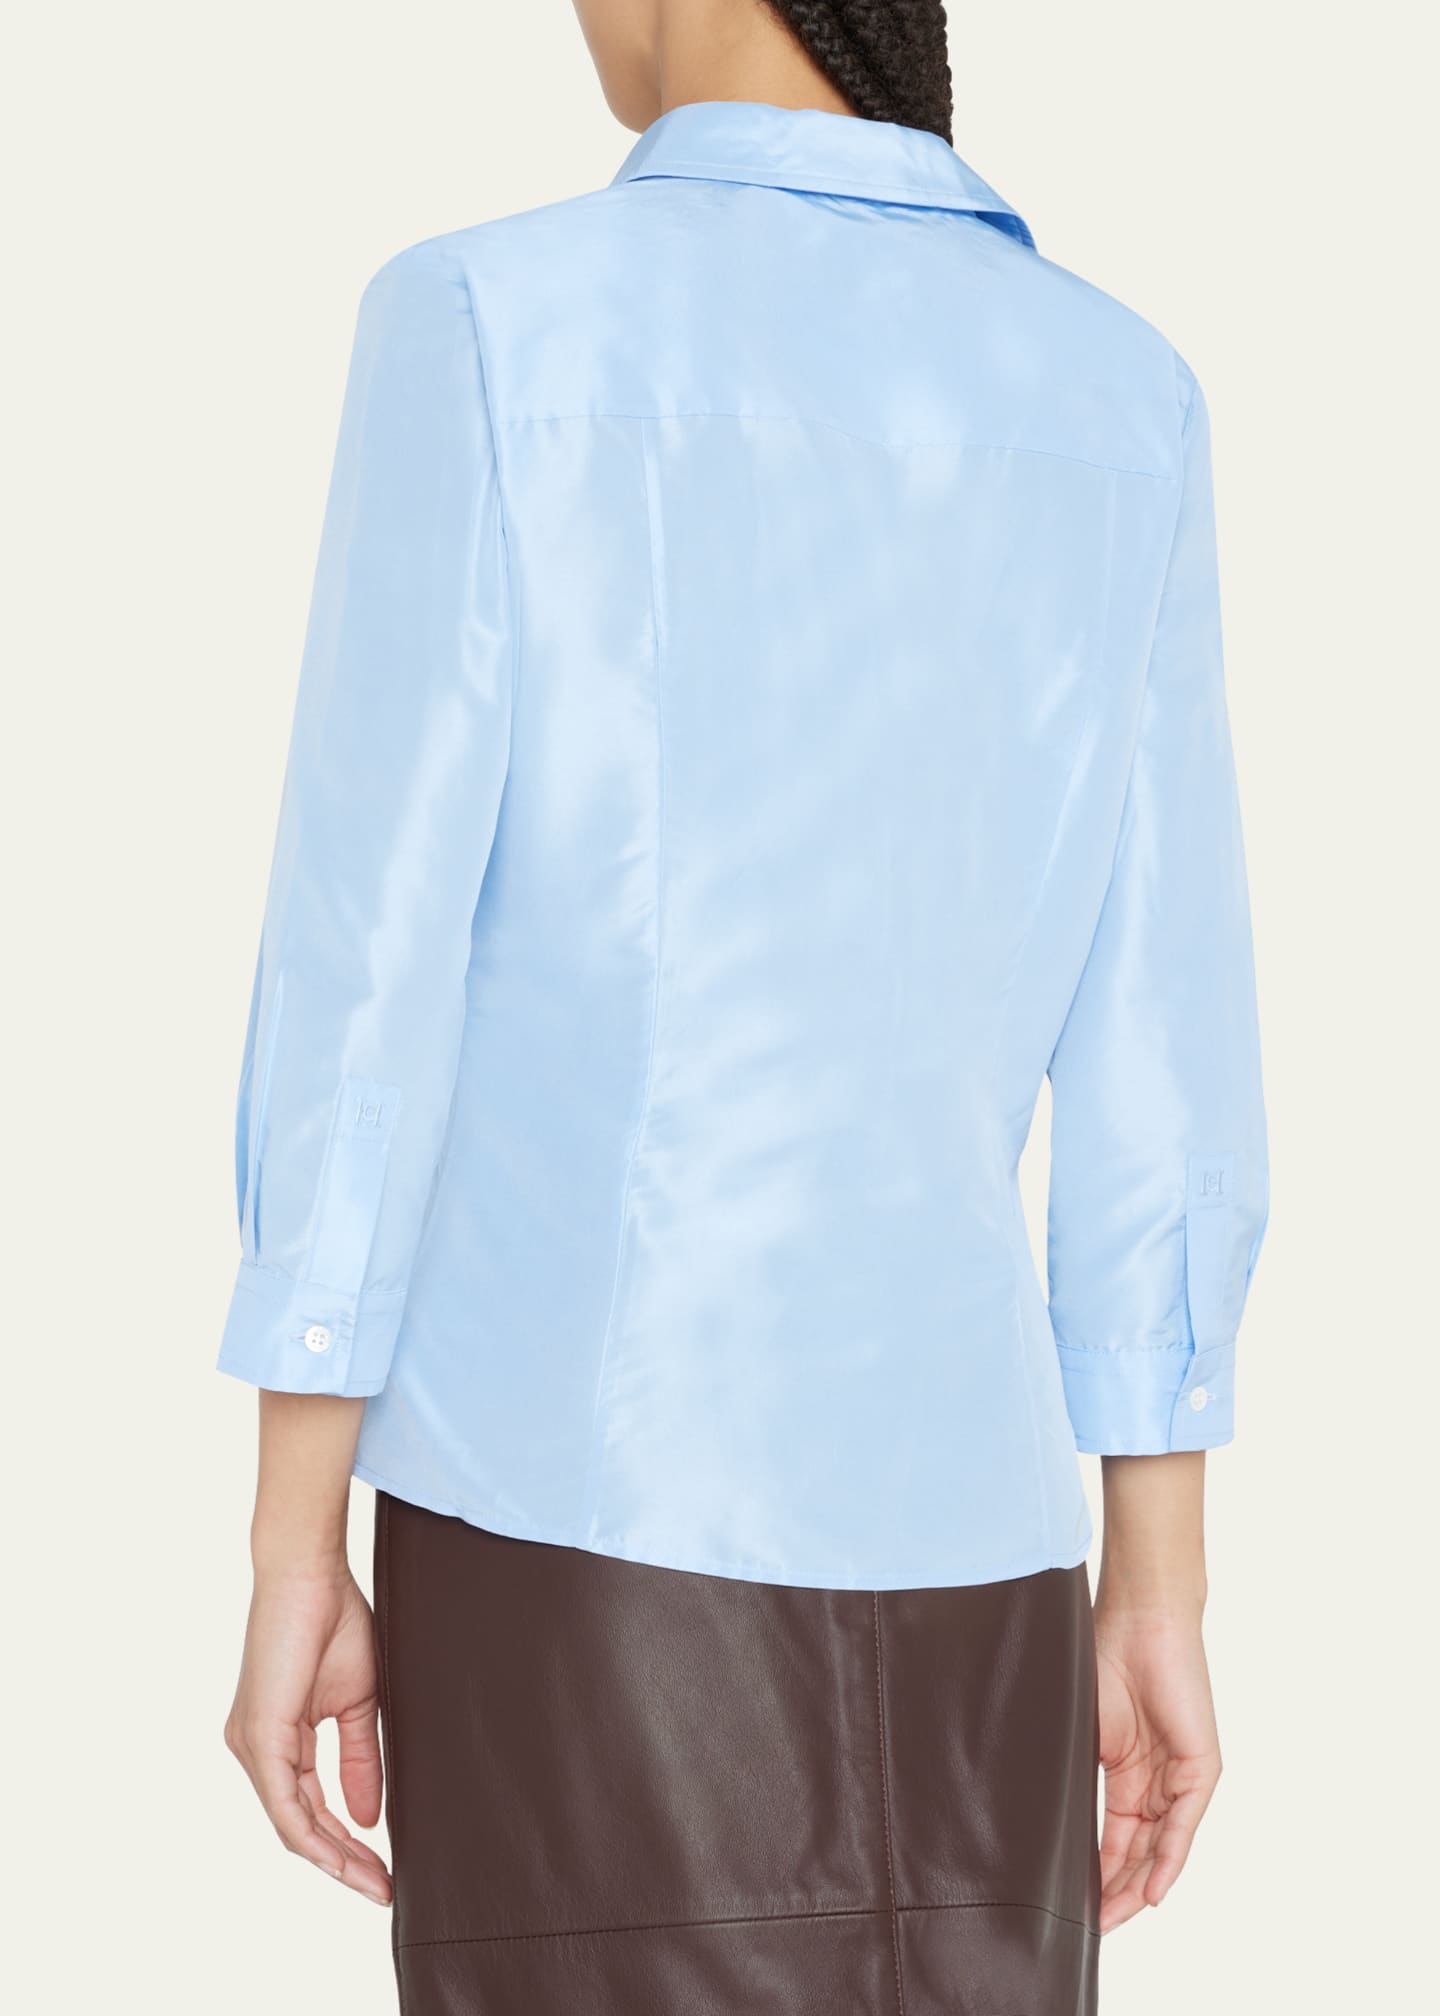 Carolina Herrera Taffeta Button-Front Shirt - Bergdorf Goodman